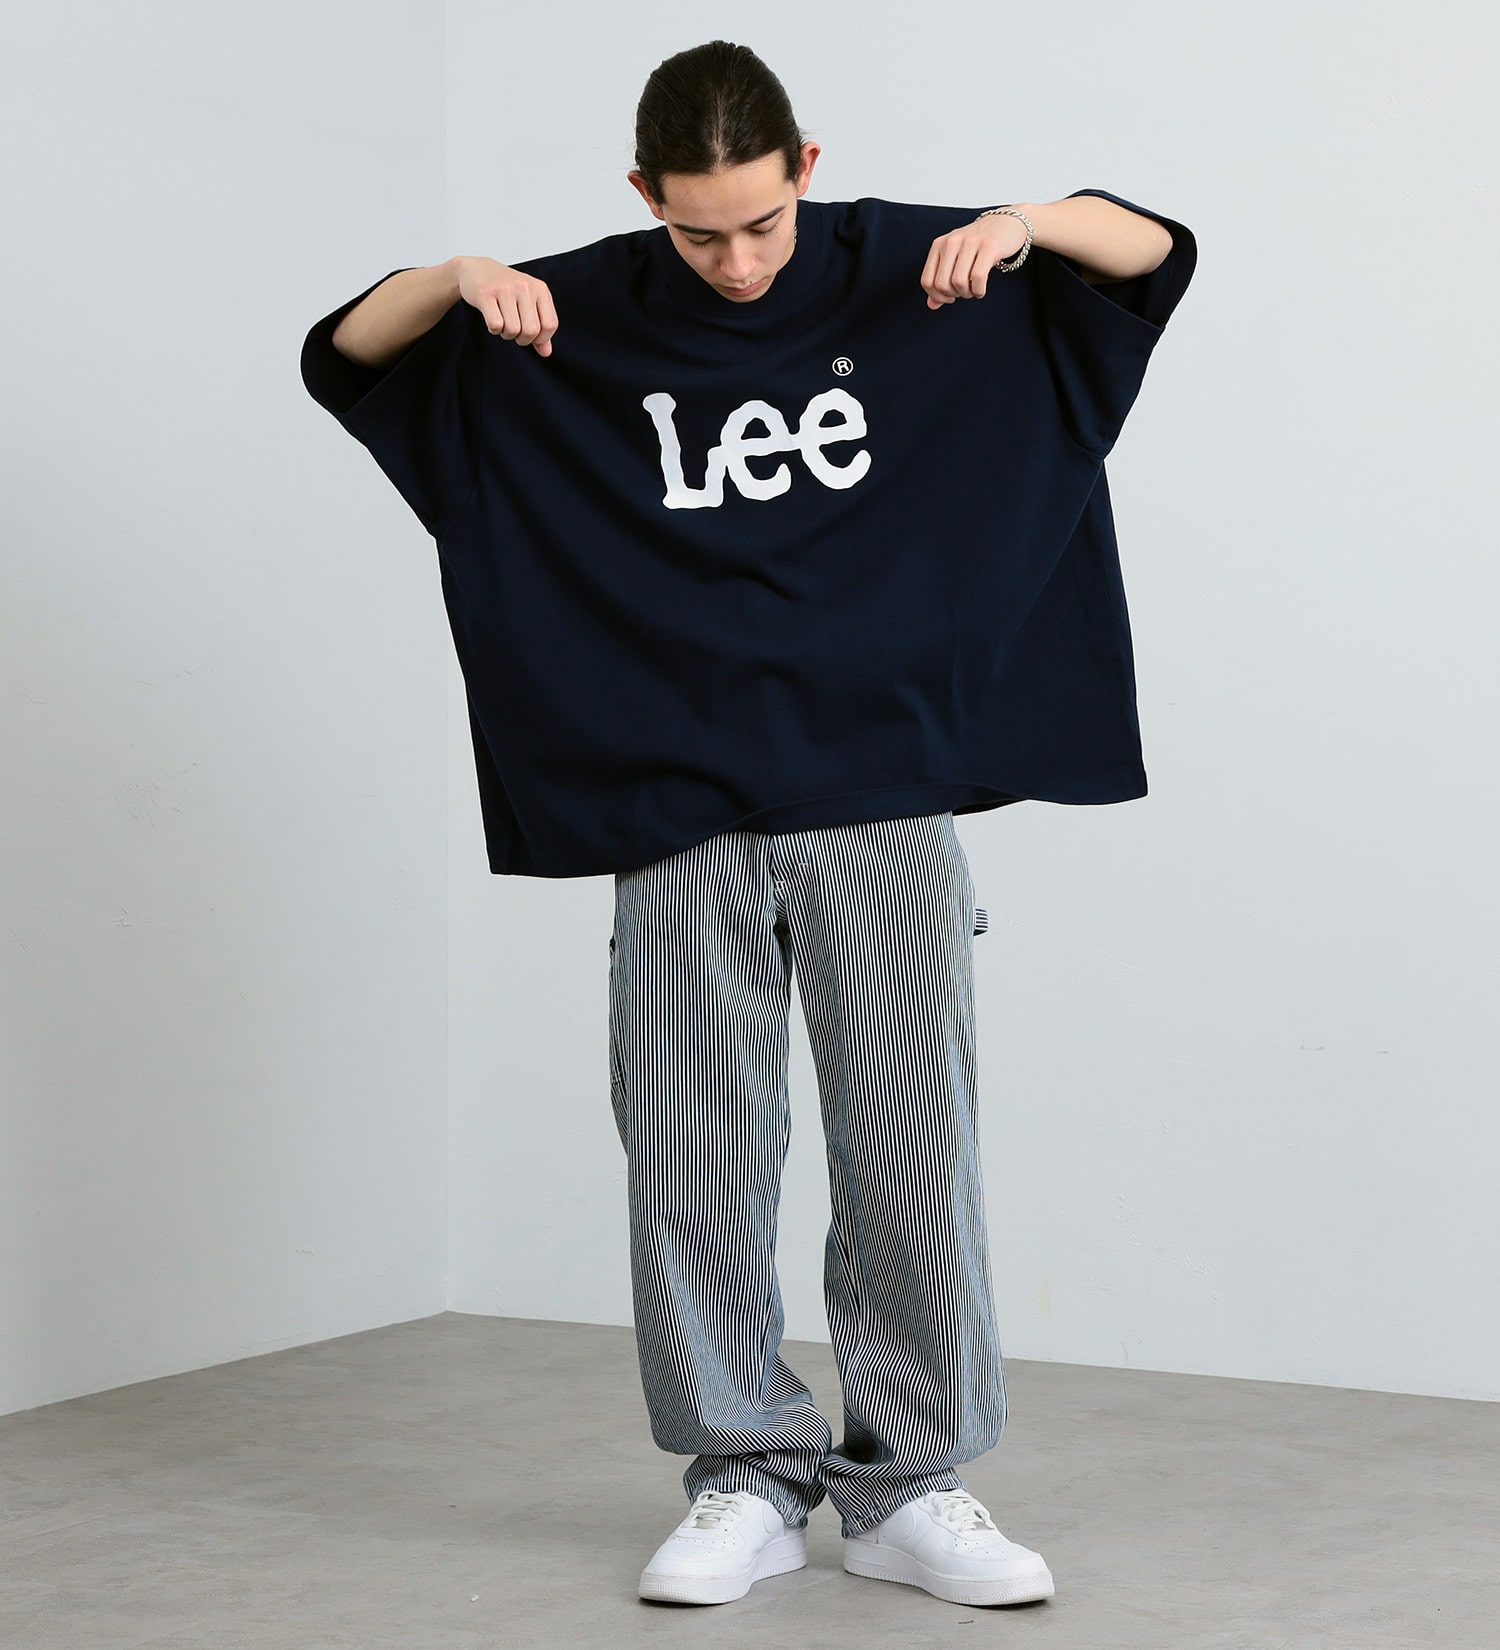 Lee(リー)の【GW SALE】【SUPER SIZED】Lee LOGO ショートスリーブTee|トップス/Tシャツ/カットソー/メンズ|ネイビー